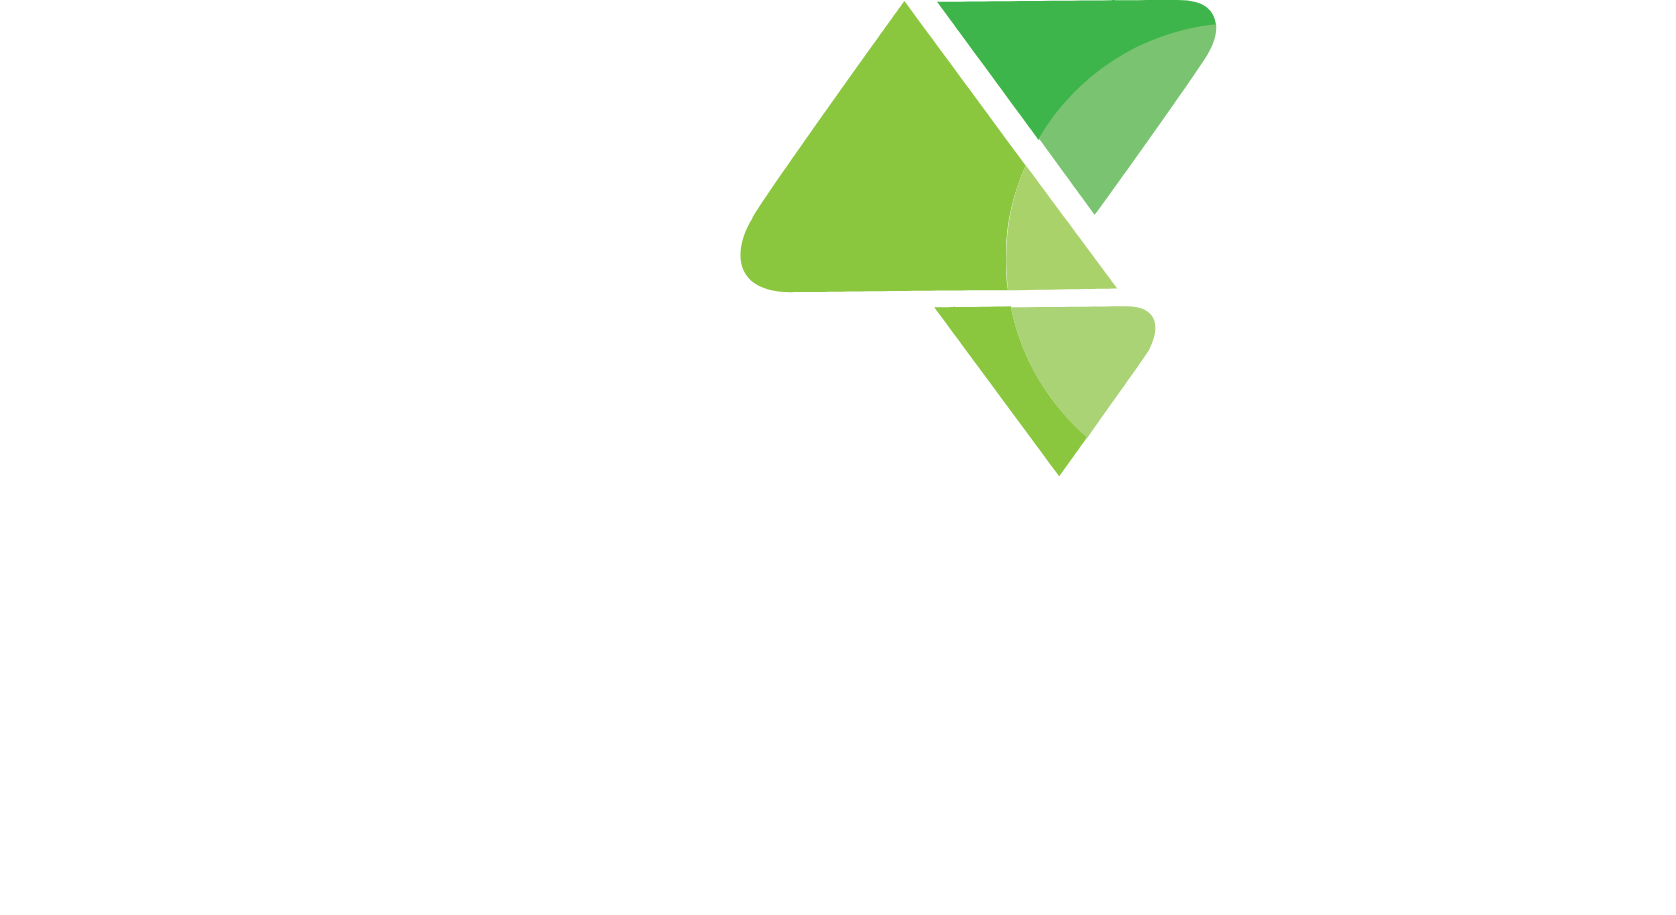 Sigma Lithium logo large for dark backgrounds (transparent PNG)